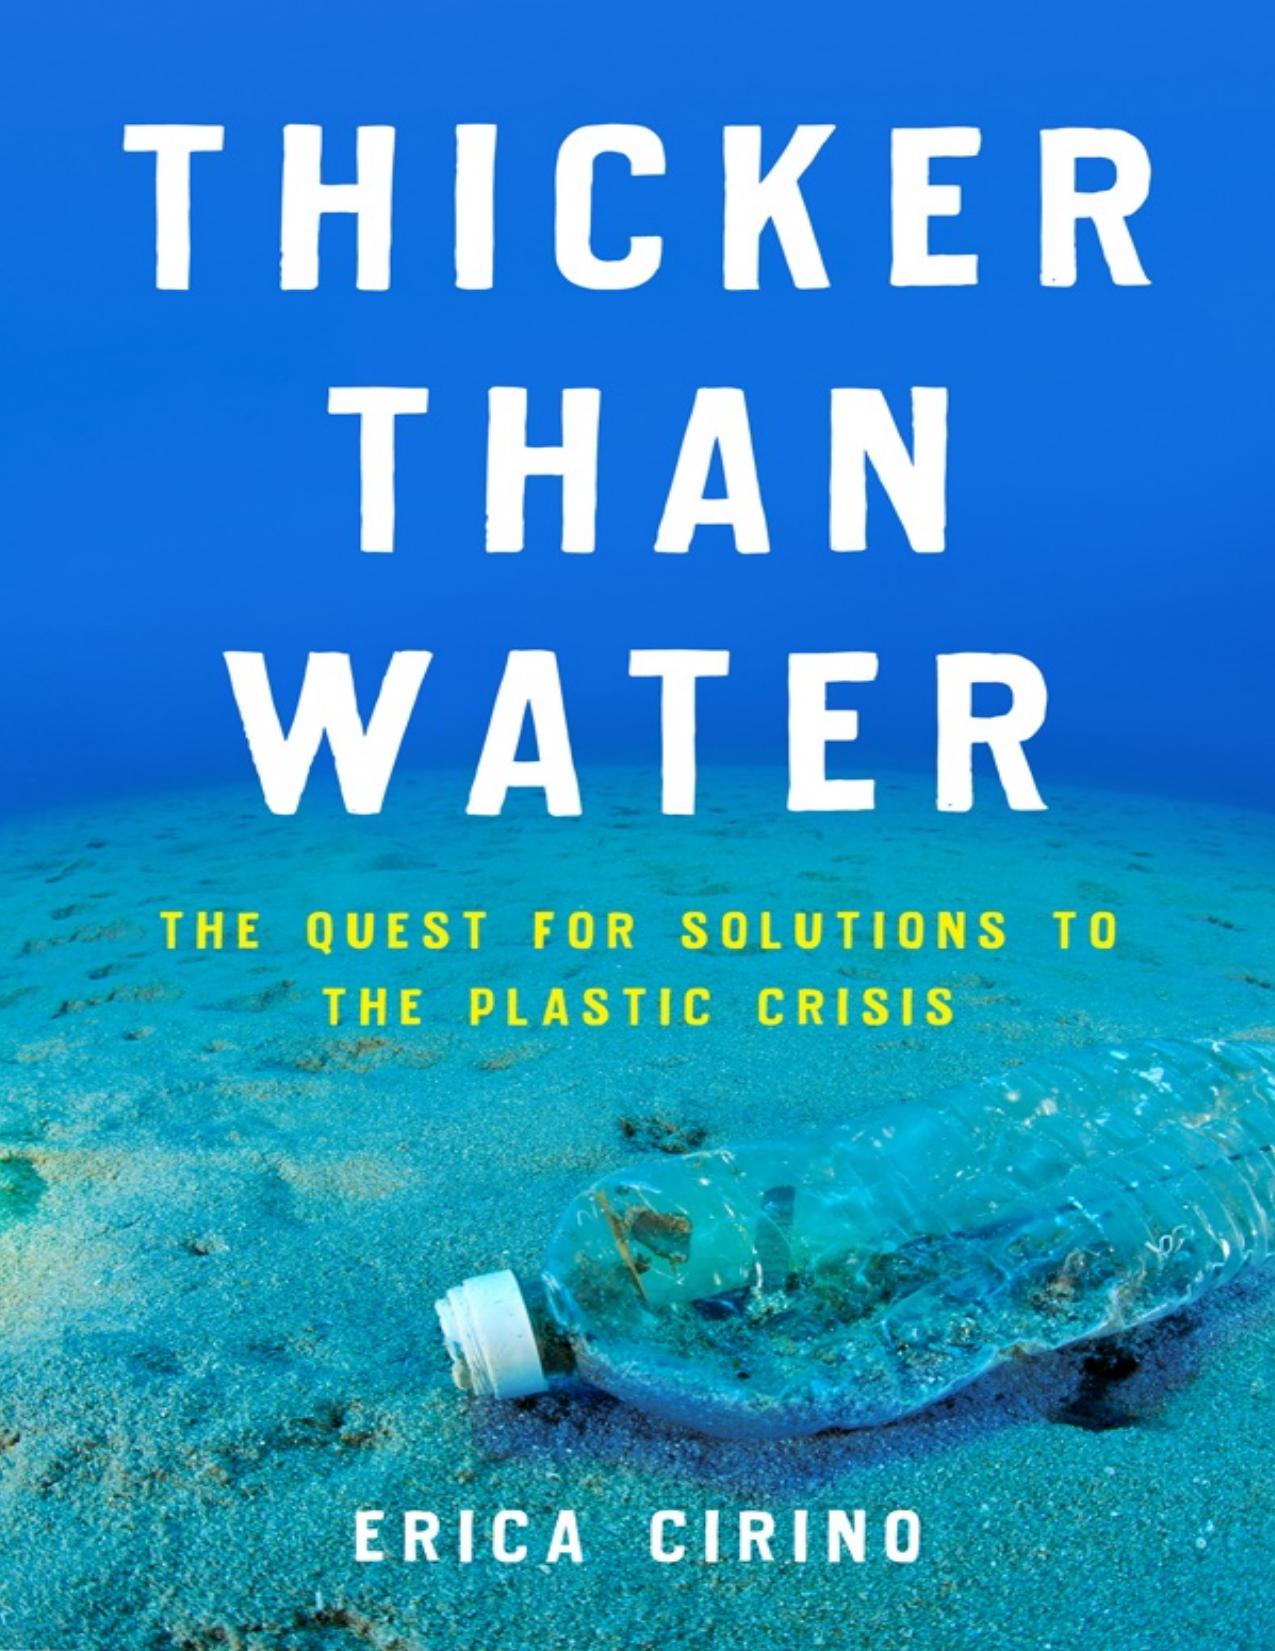 Thicker Than Water by Erica Cirino